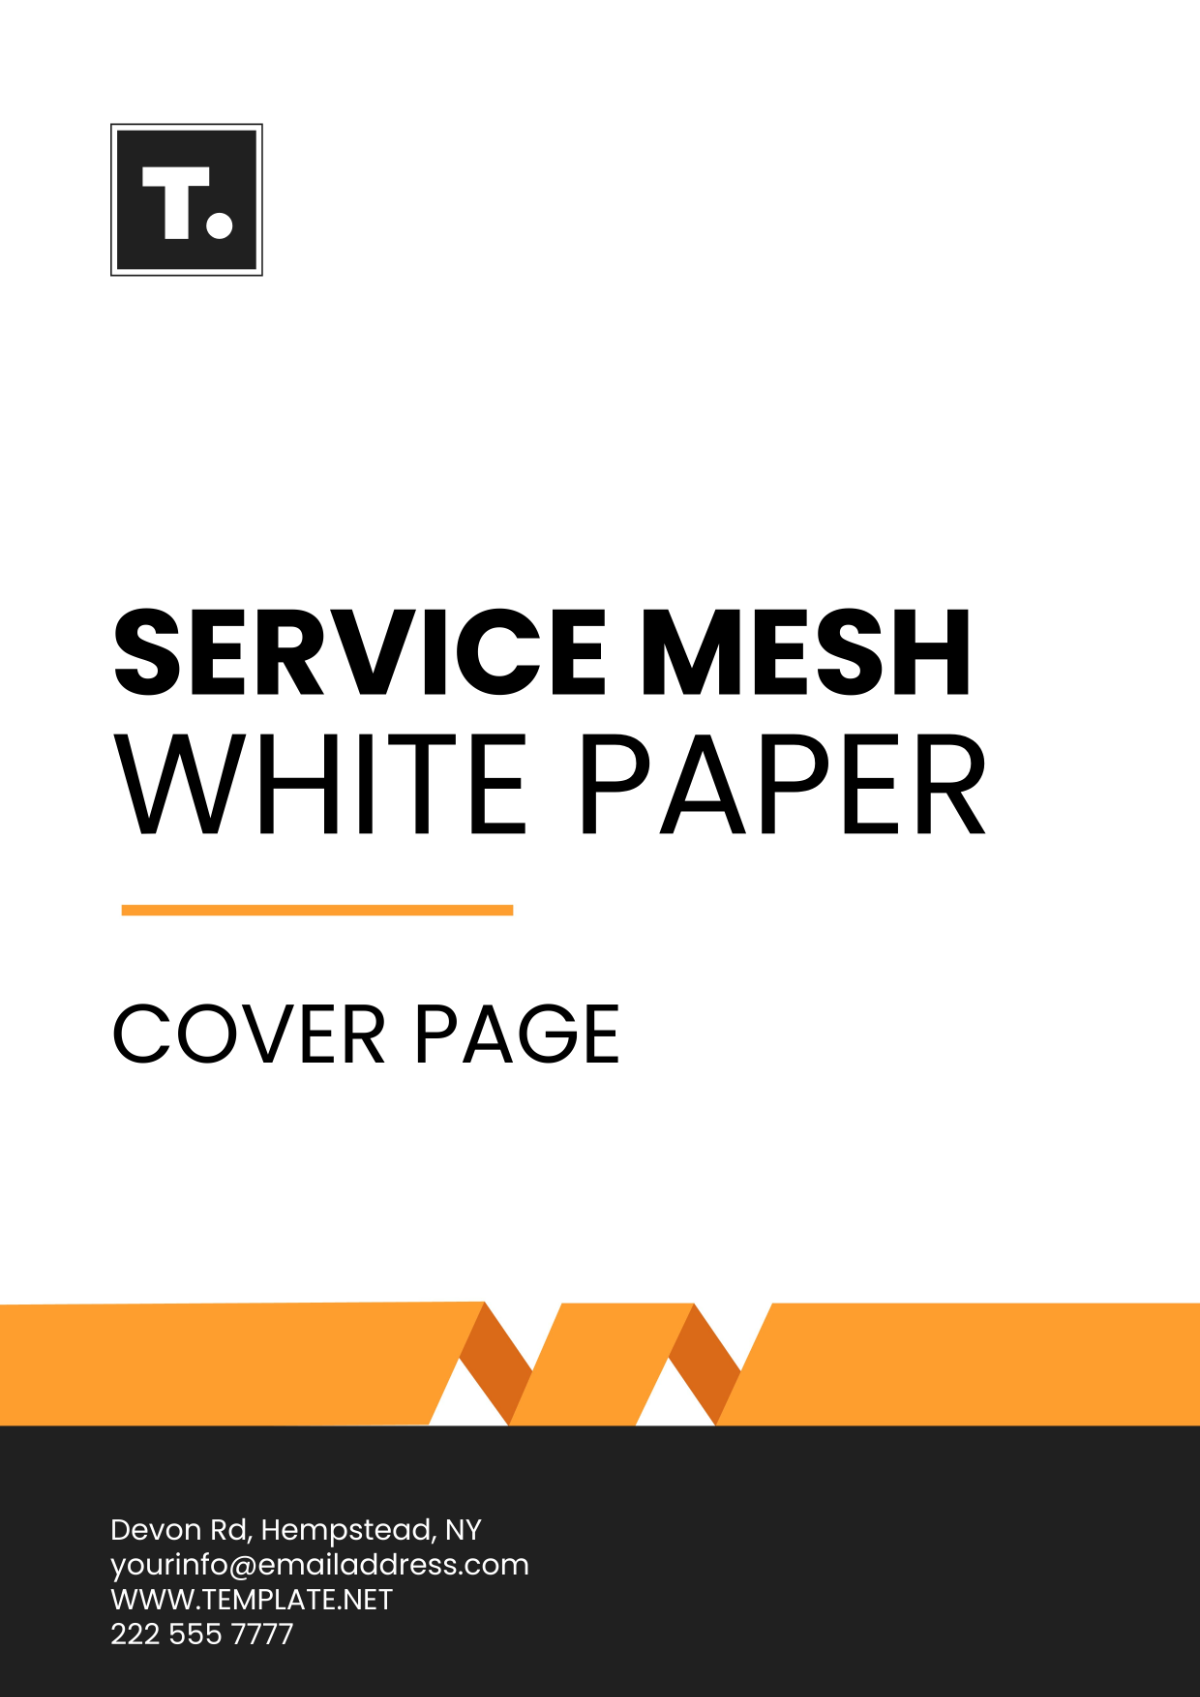 Service Mesh White Paper Cover Page